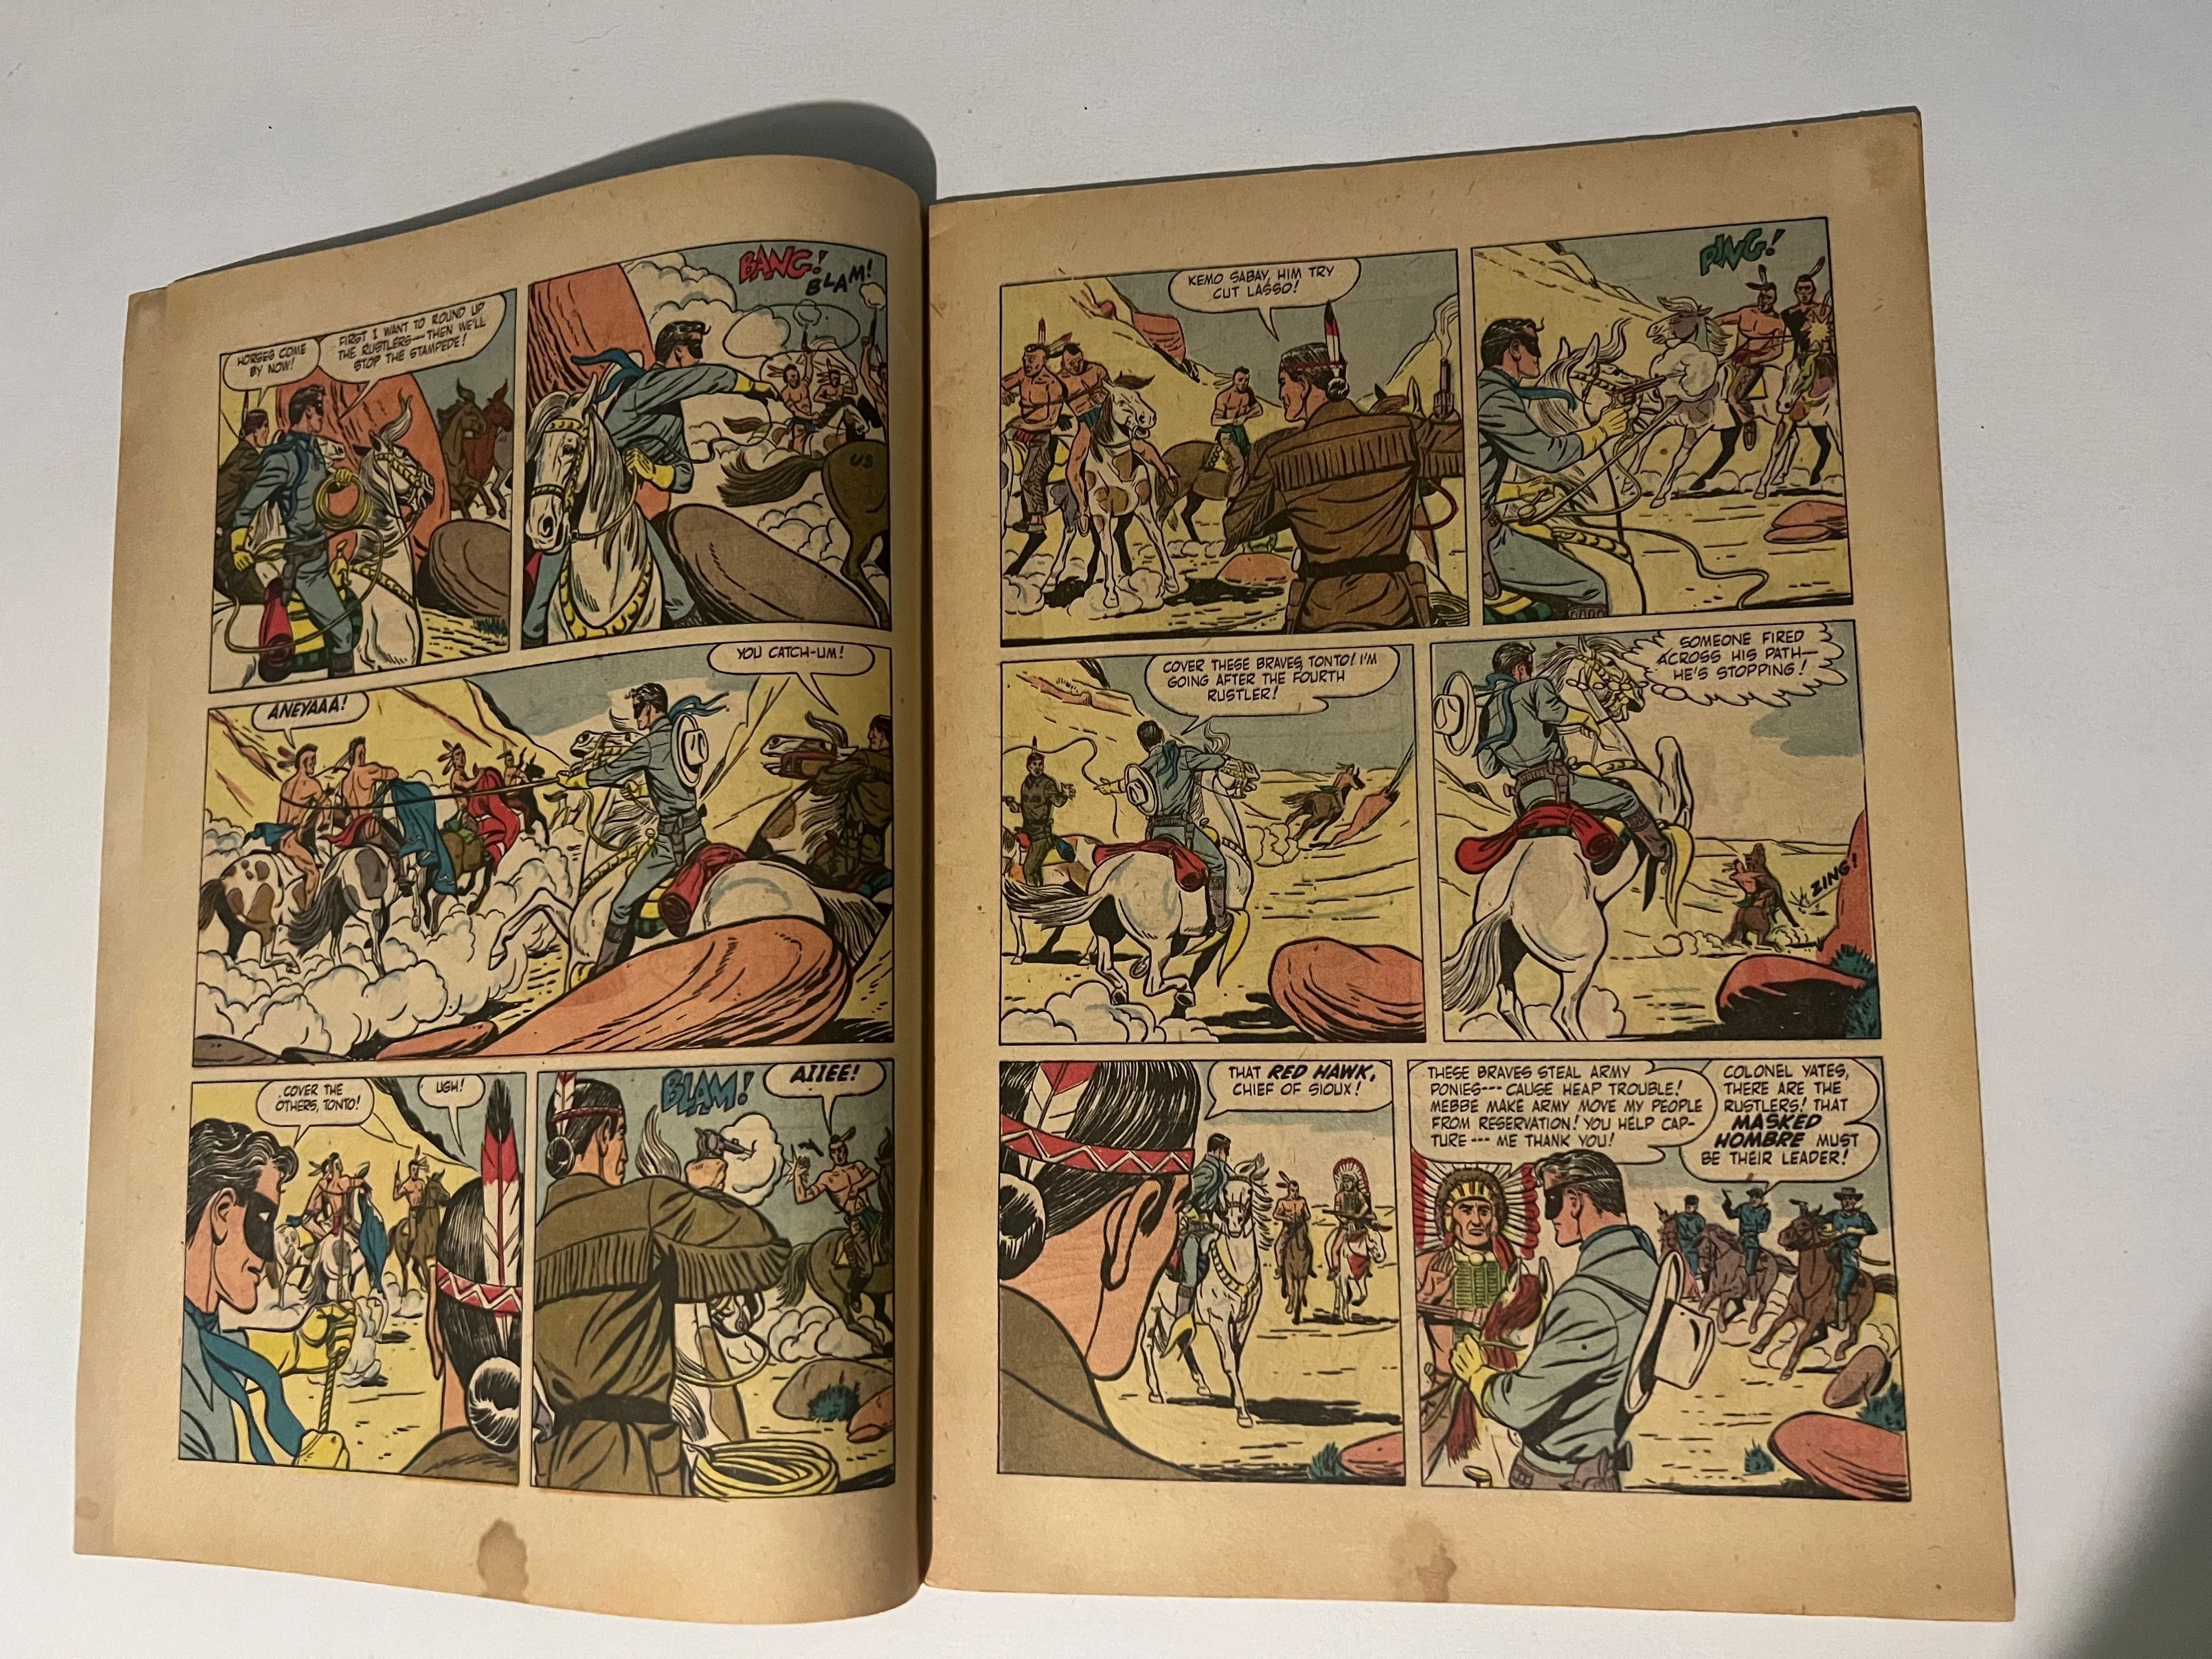 Komiks oryginalny amerykańskiThe Lone Ranger z 1952 roku